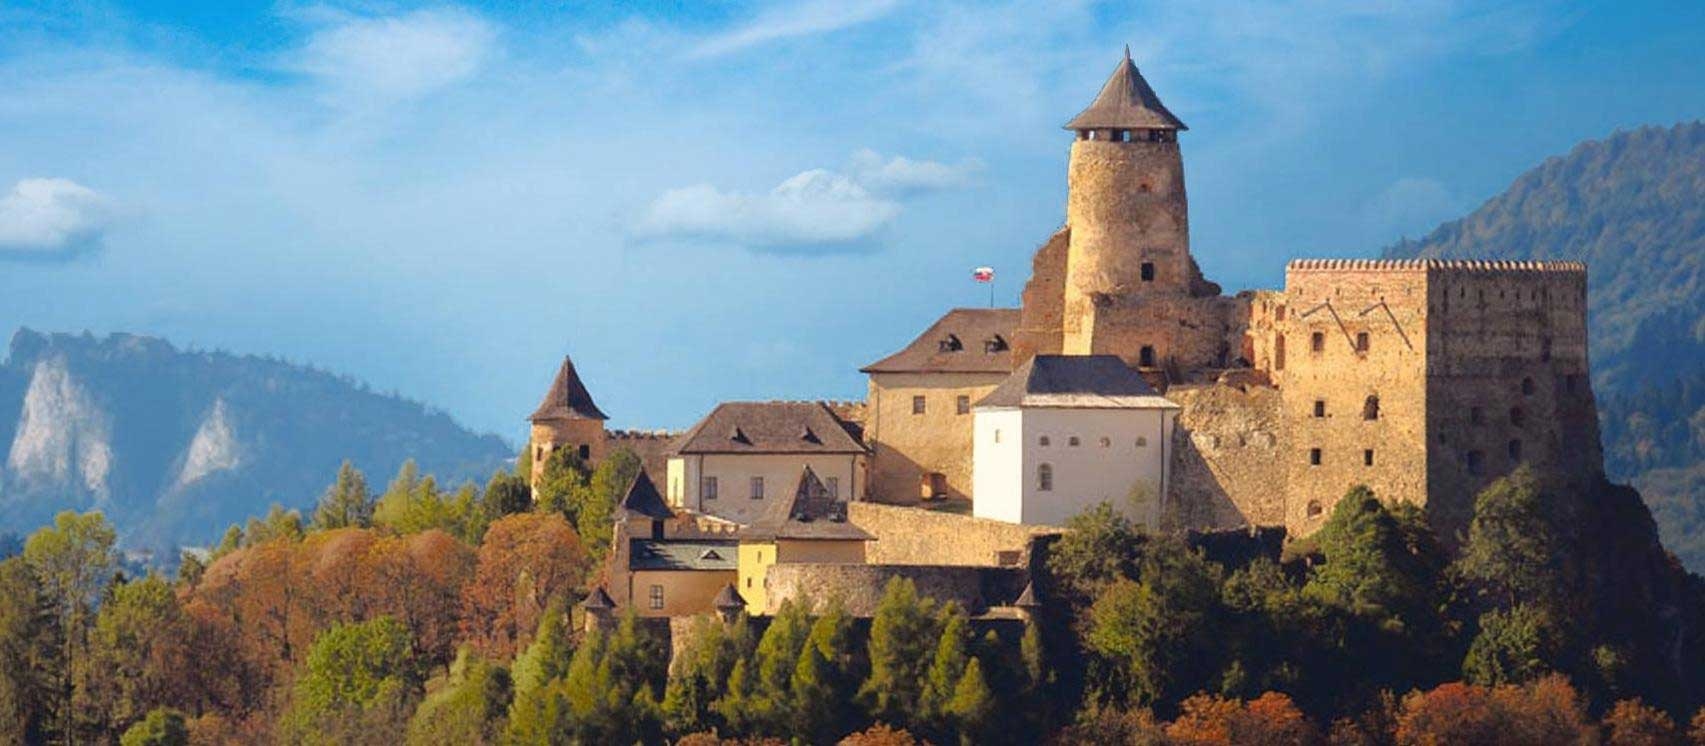 Castles in Slovakia